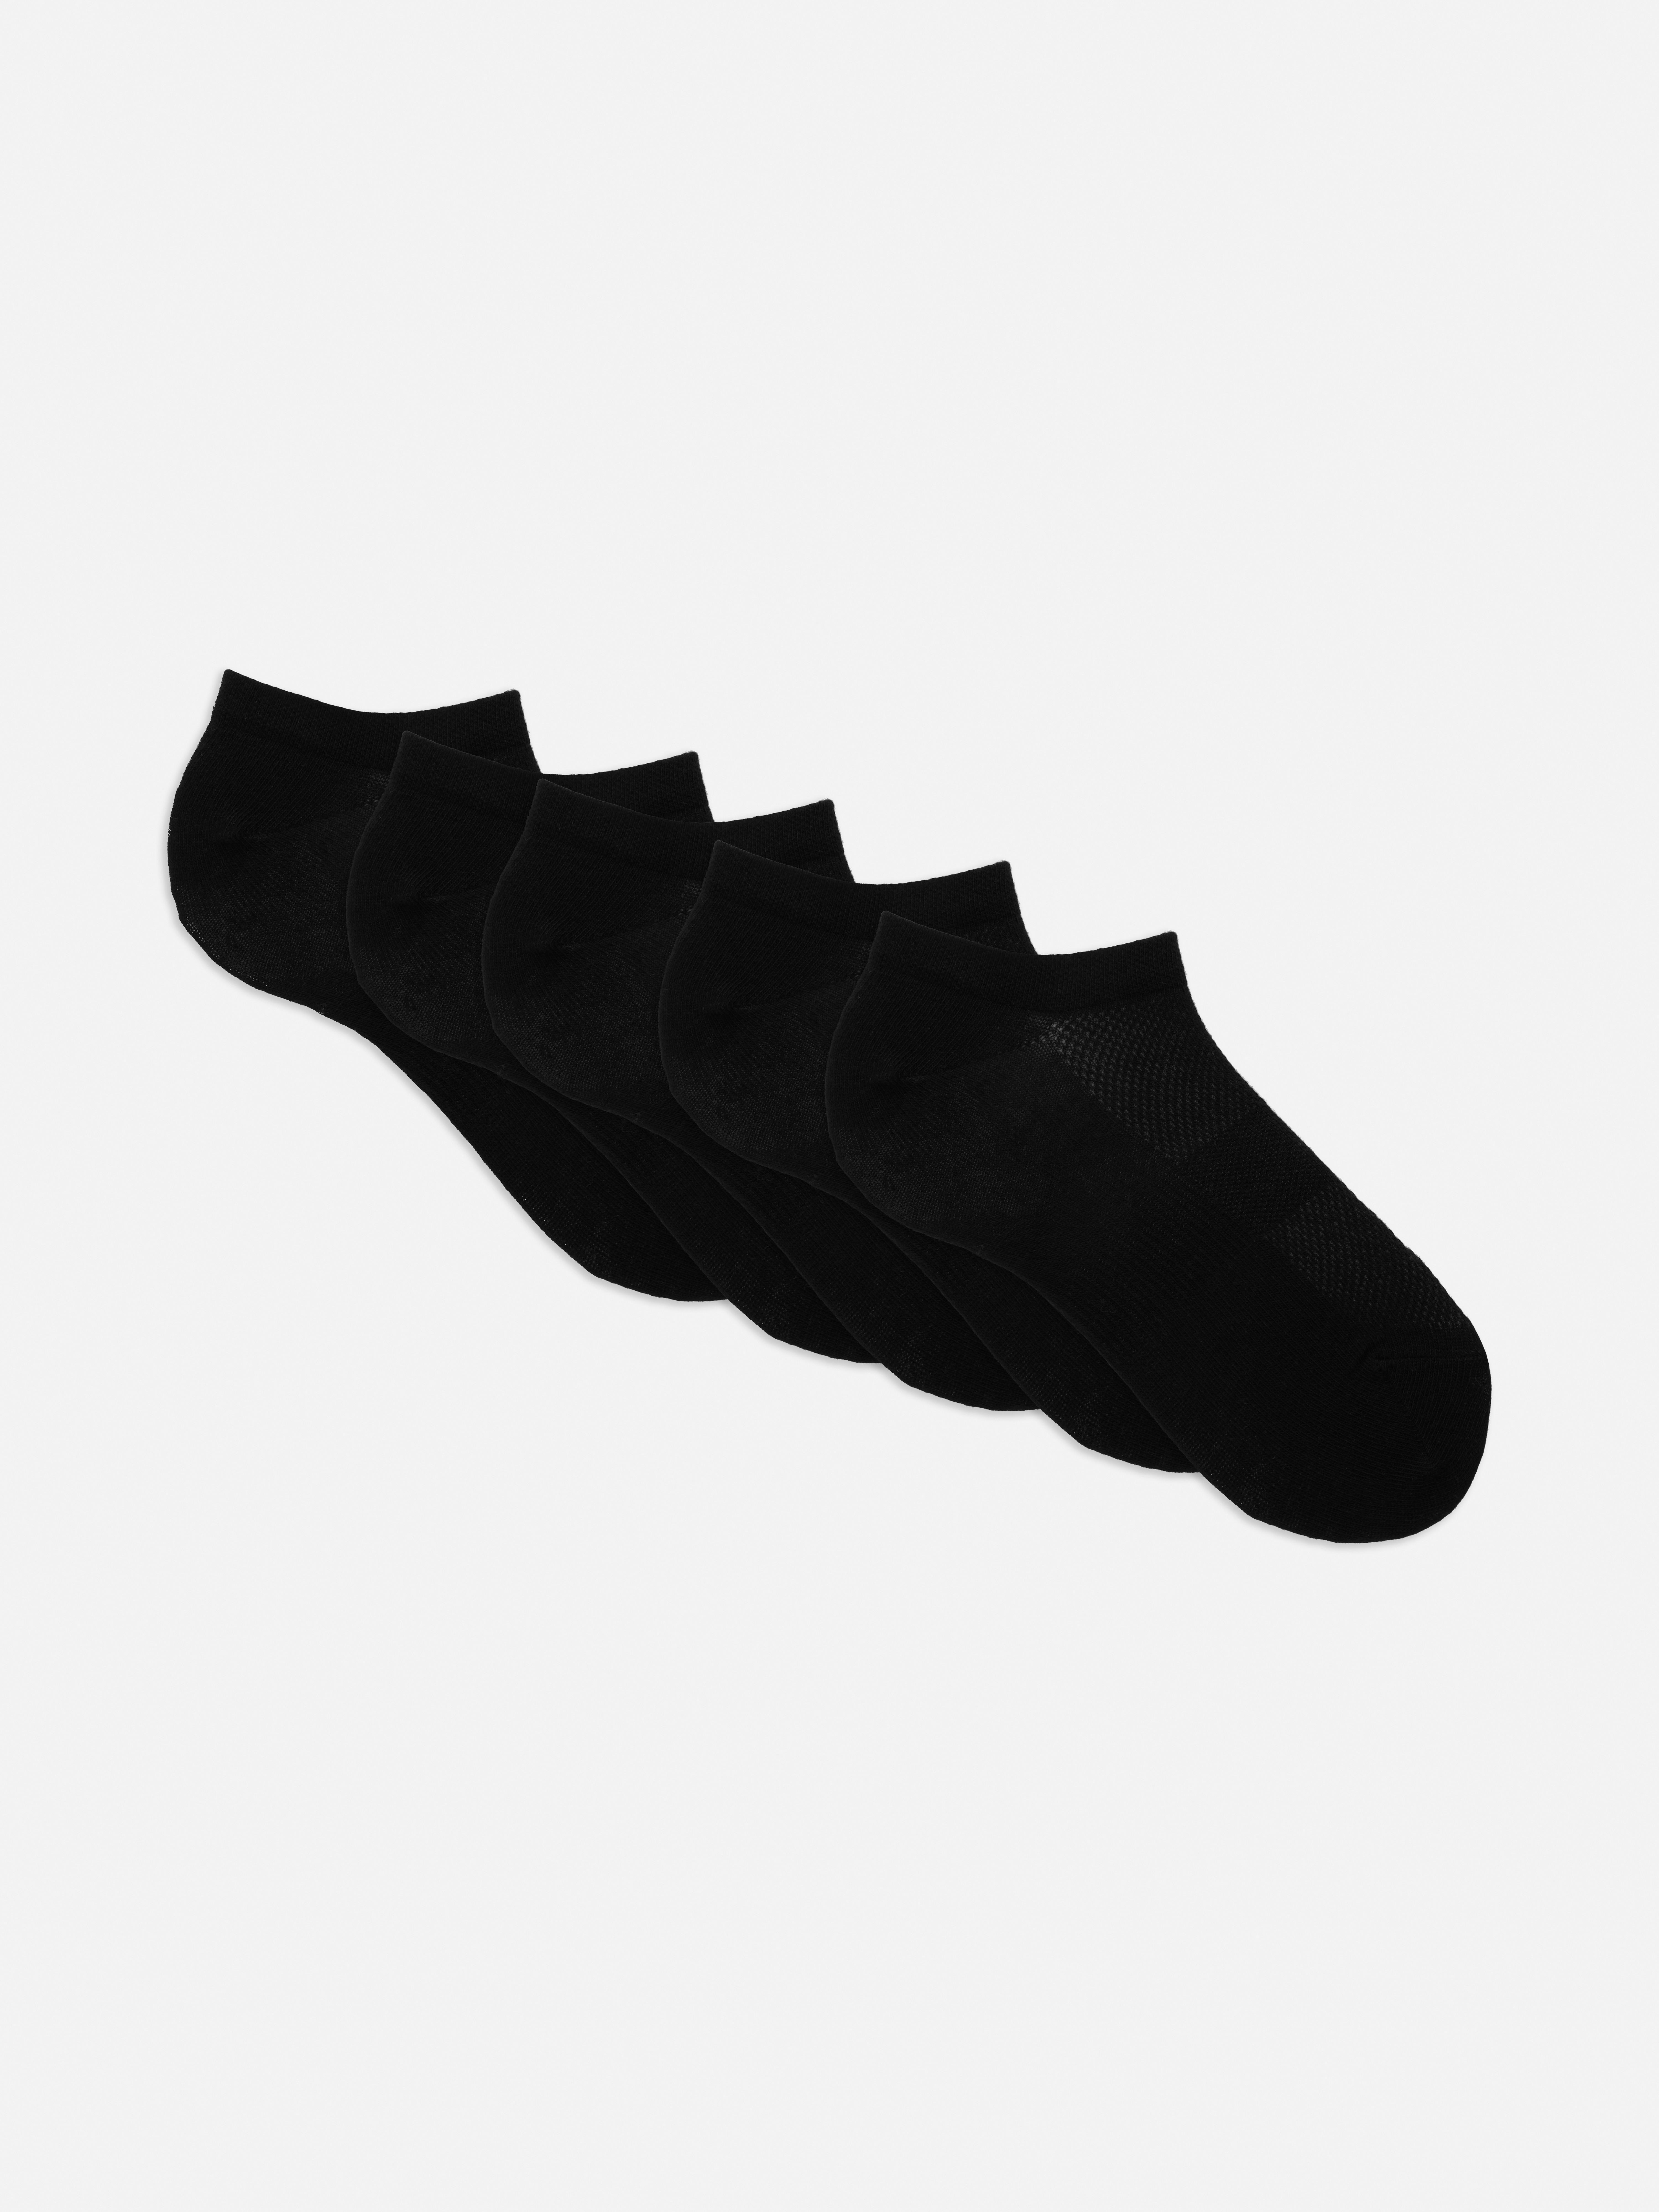 5pk Arch Support Socks Set Black